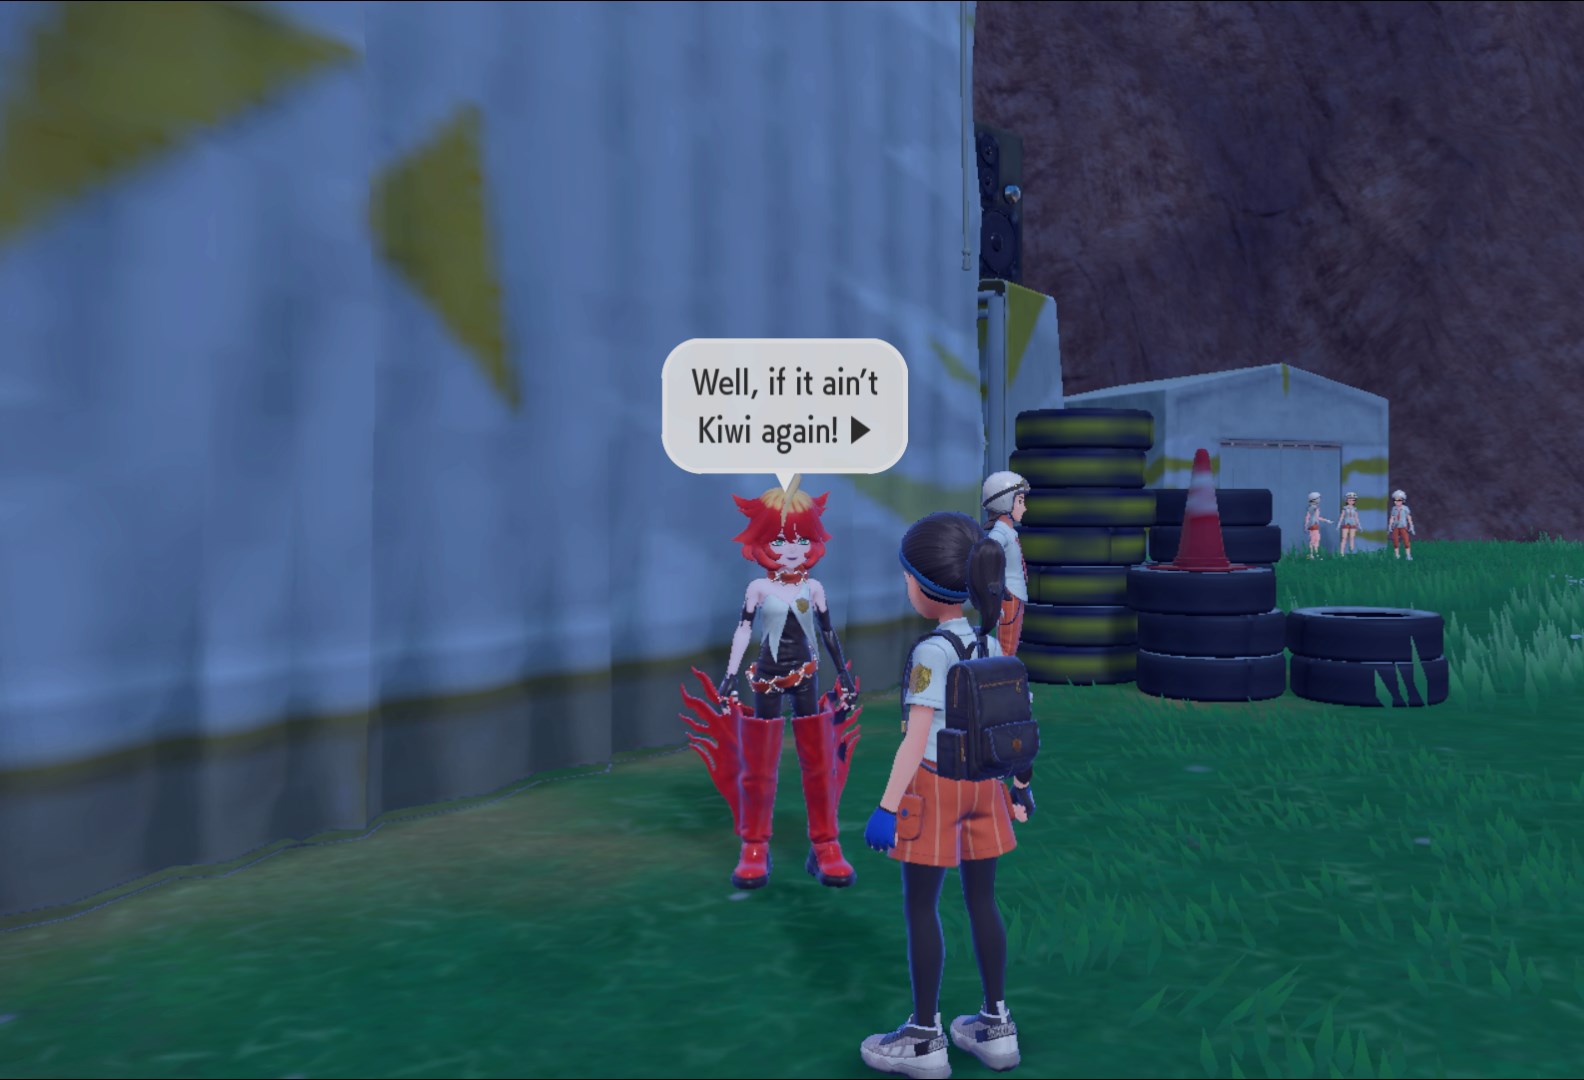 Mela greets a Pokémon trainer at her base